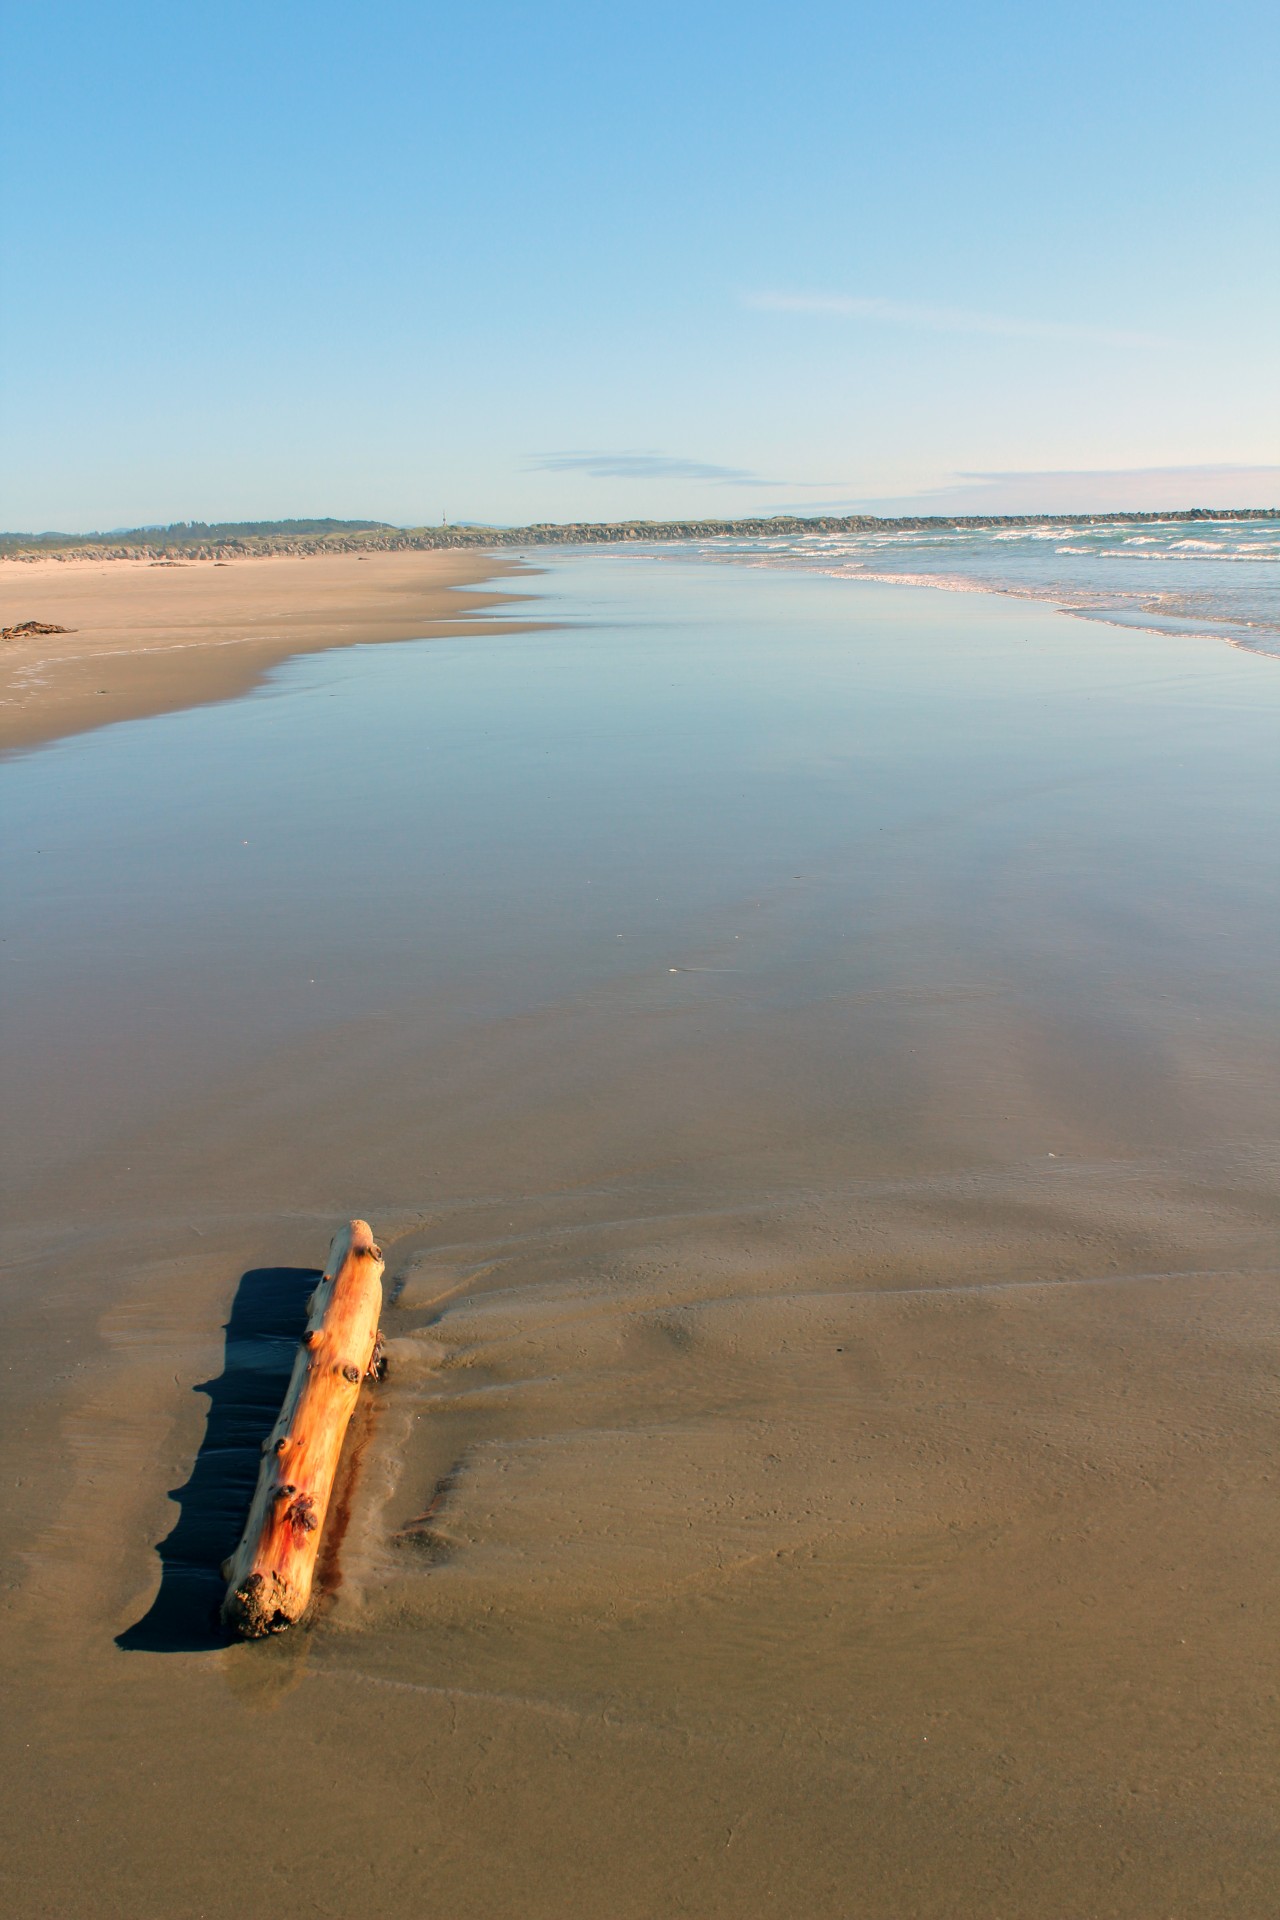 A driftwood log settles into the sand on the beach